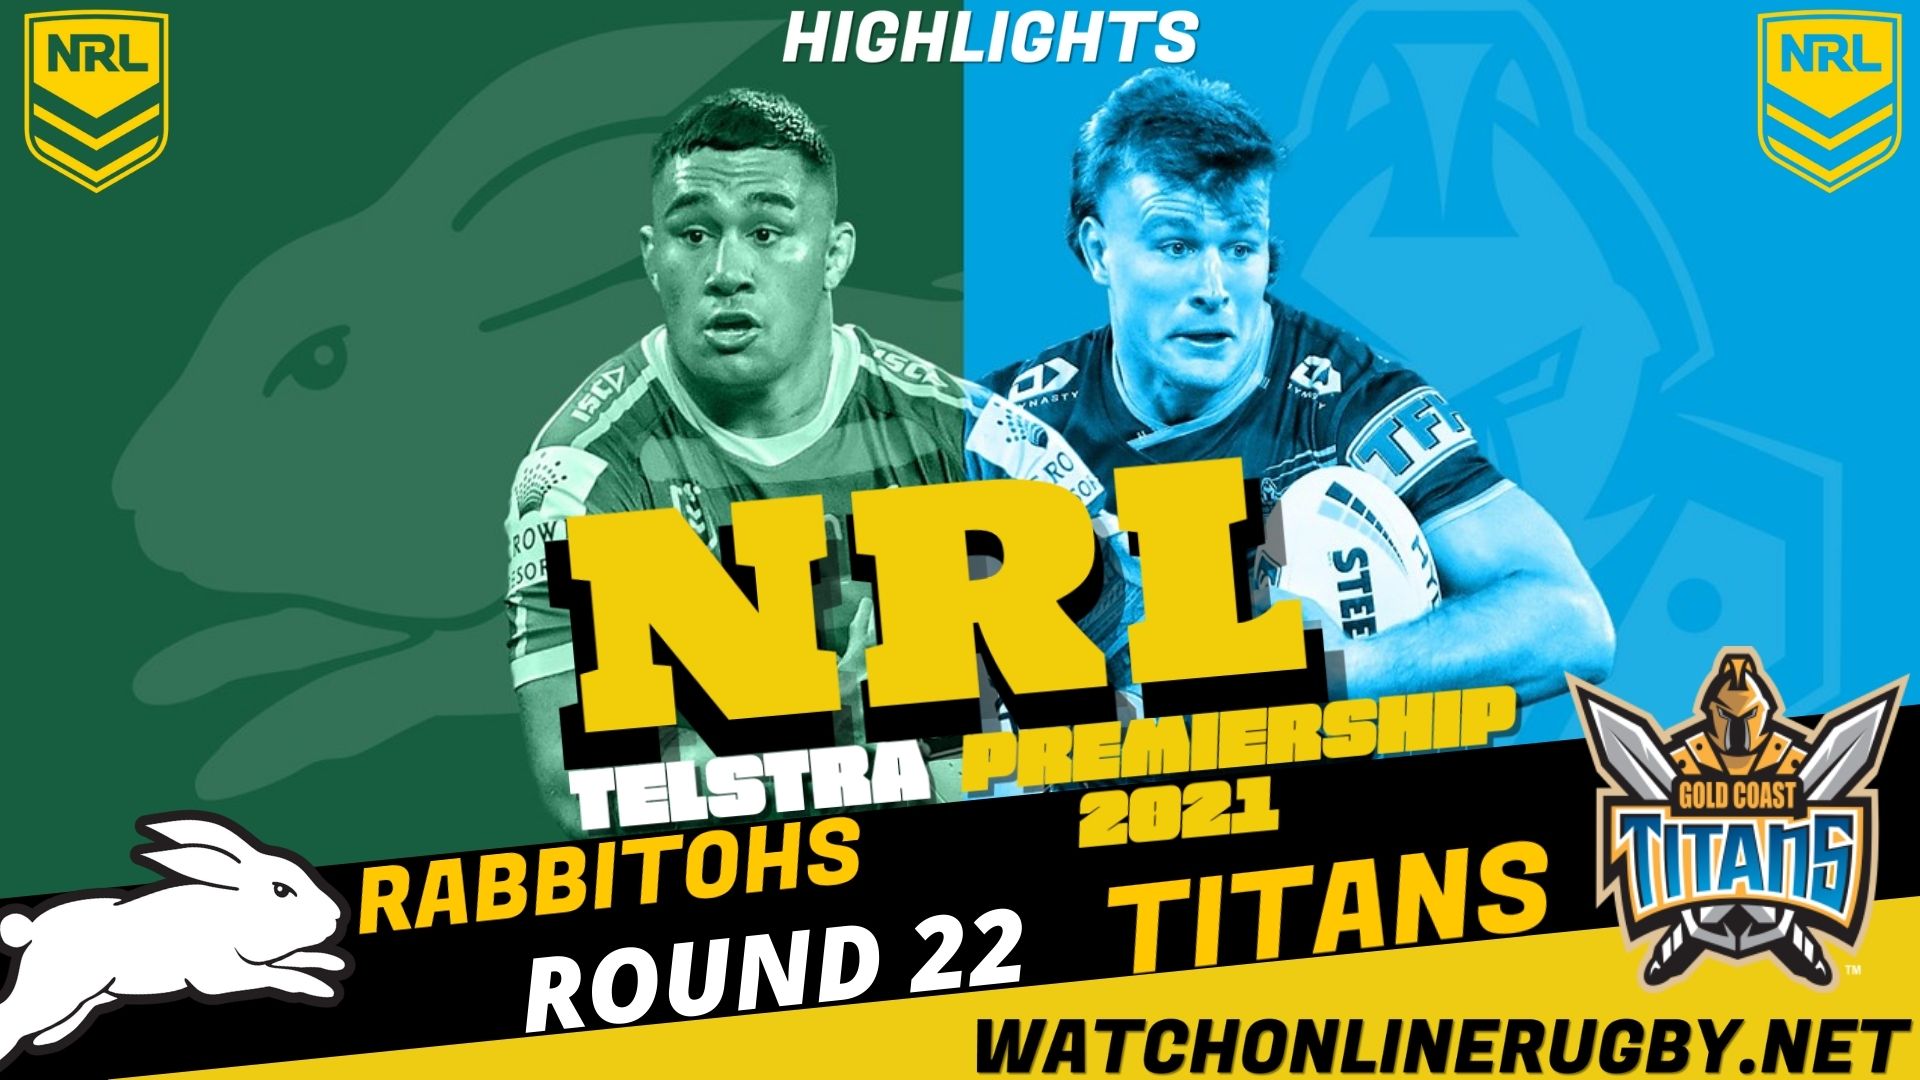 Rabbitohs Vs Titans Highlights RD 22 NRL Rugby